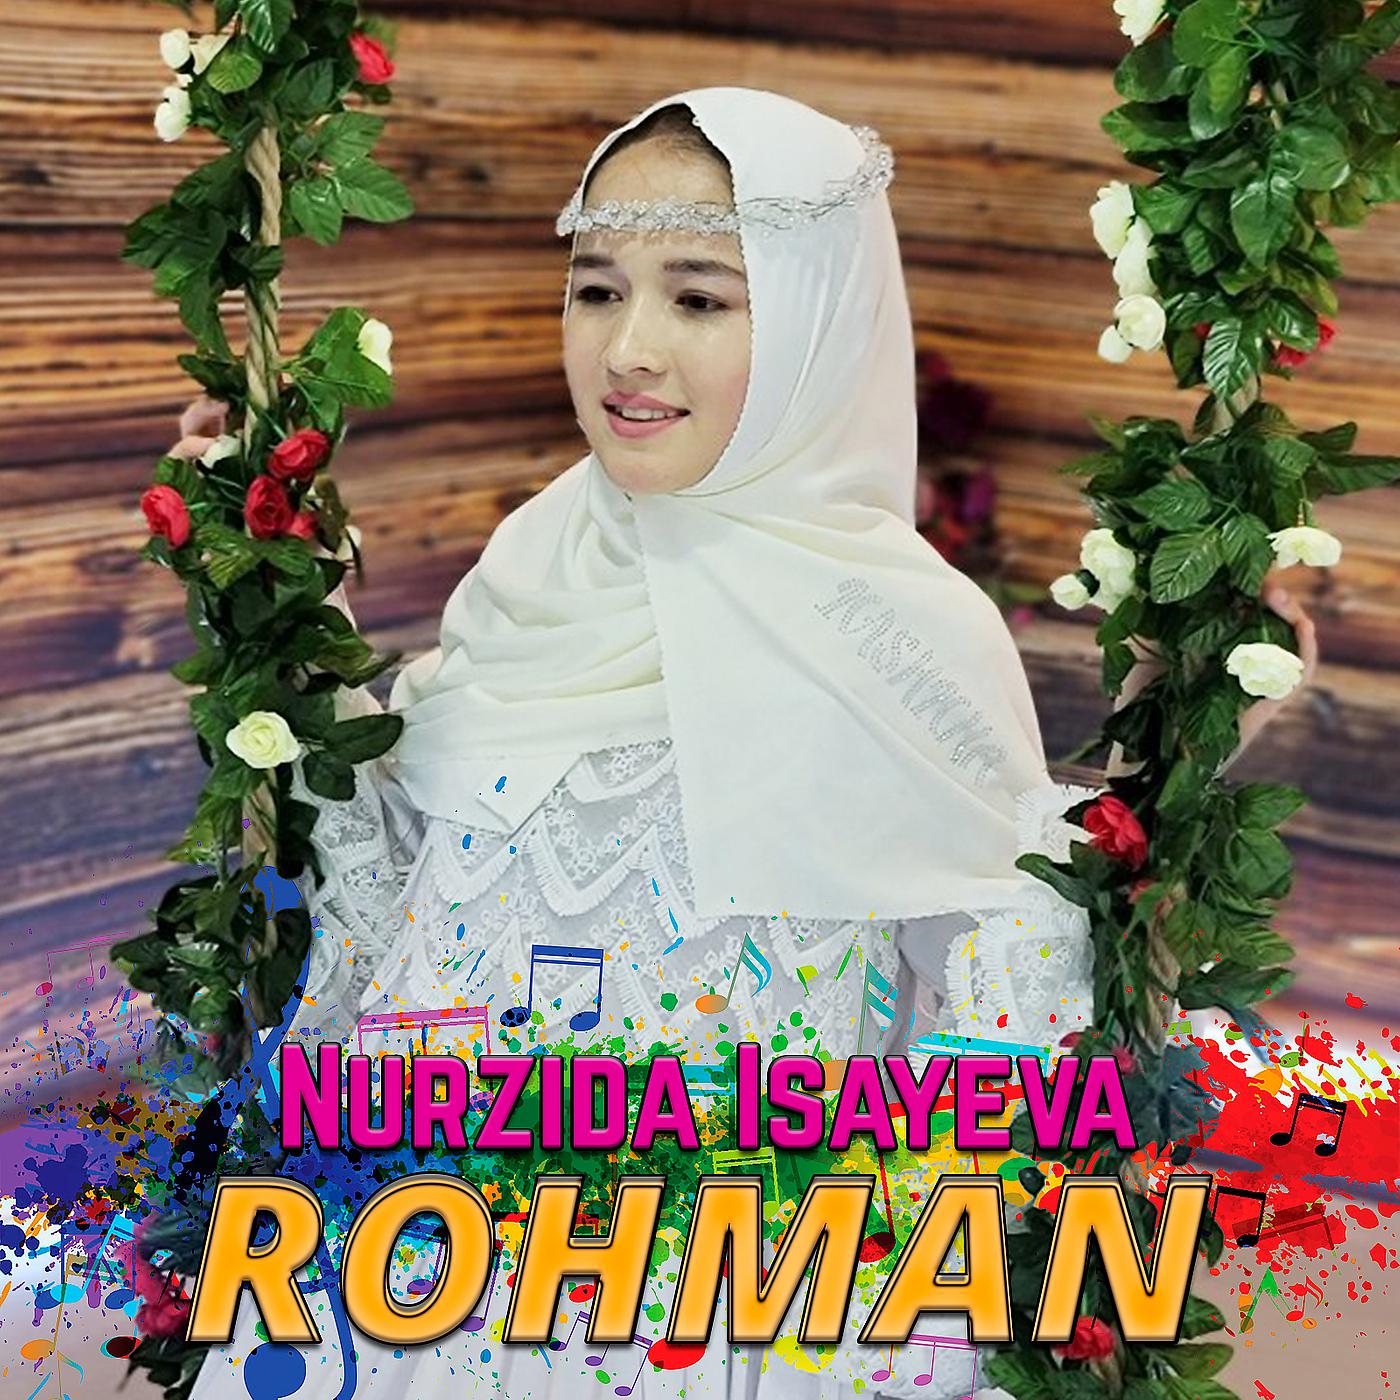 Постер альбома Rohman Ya Rohman